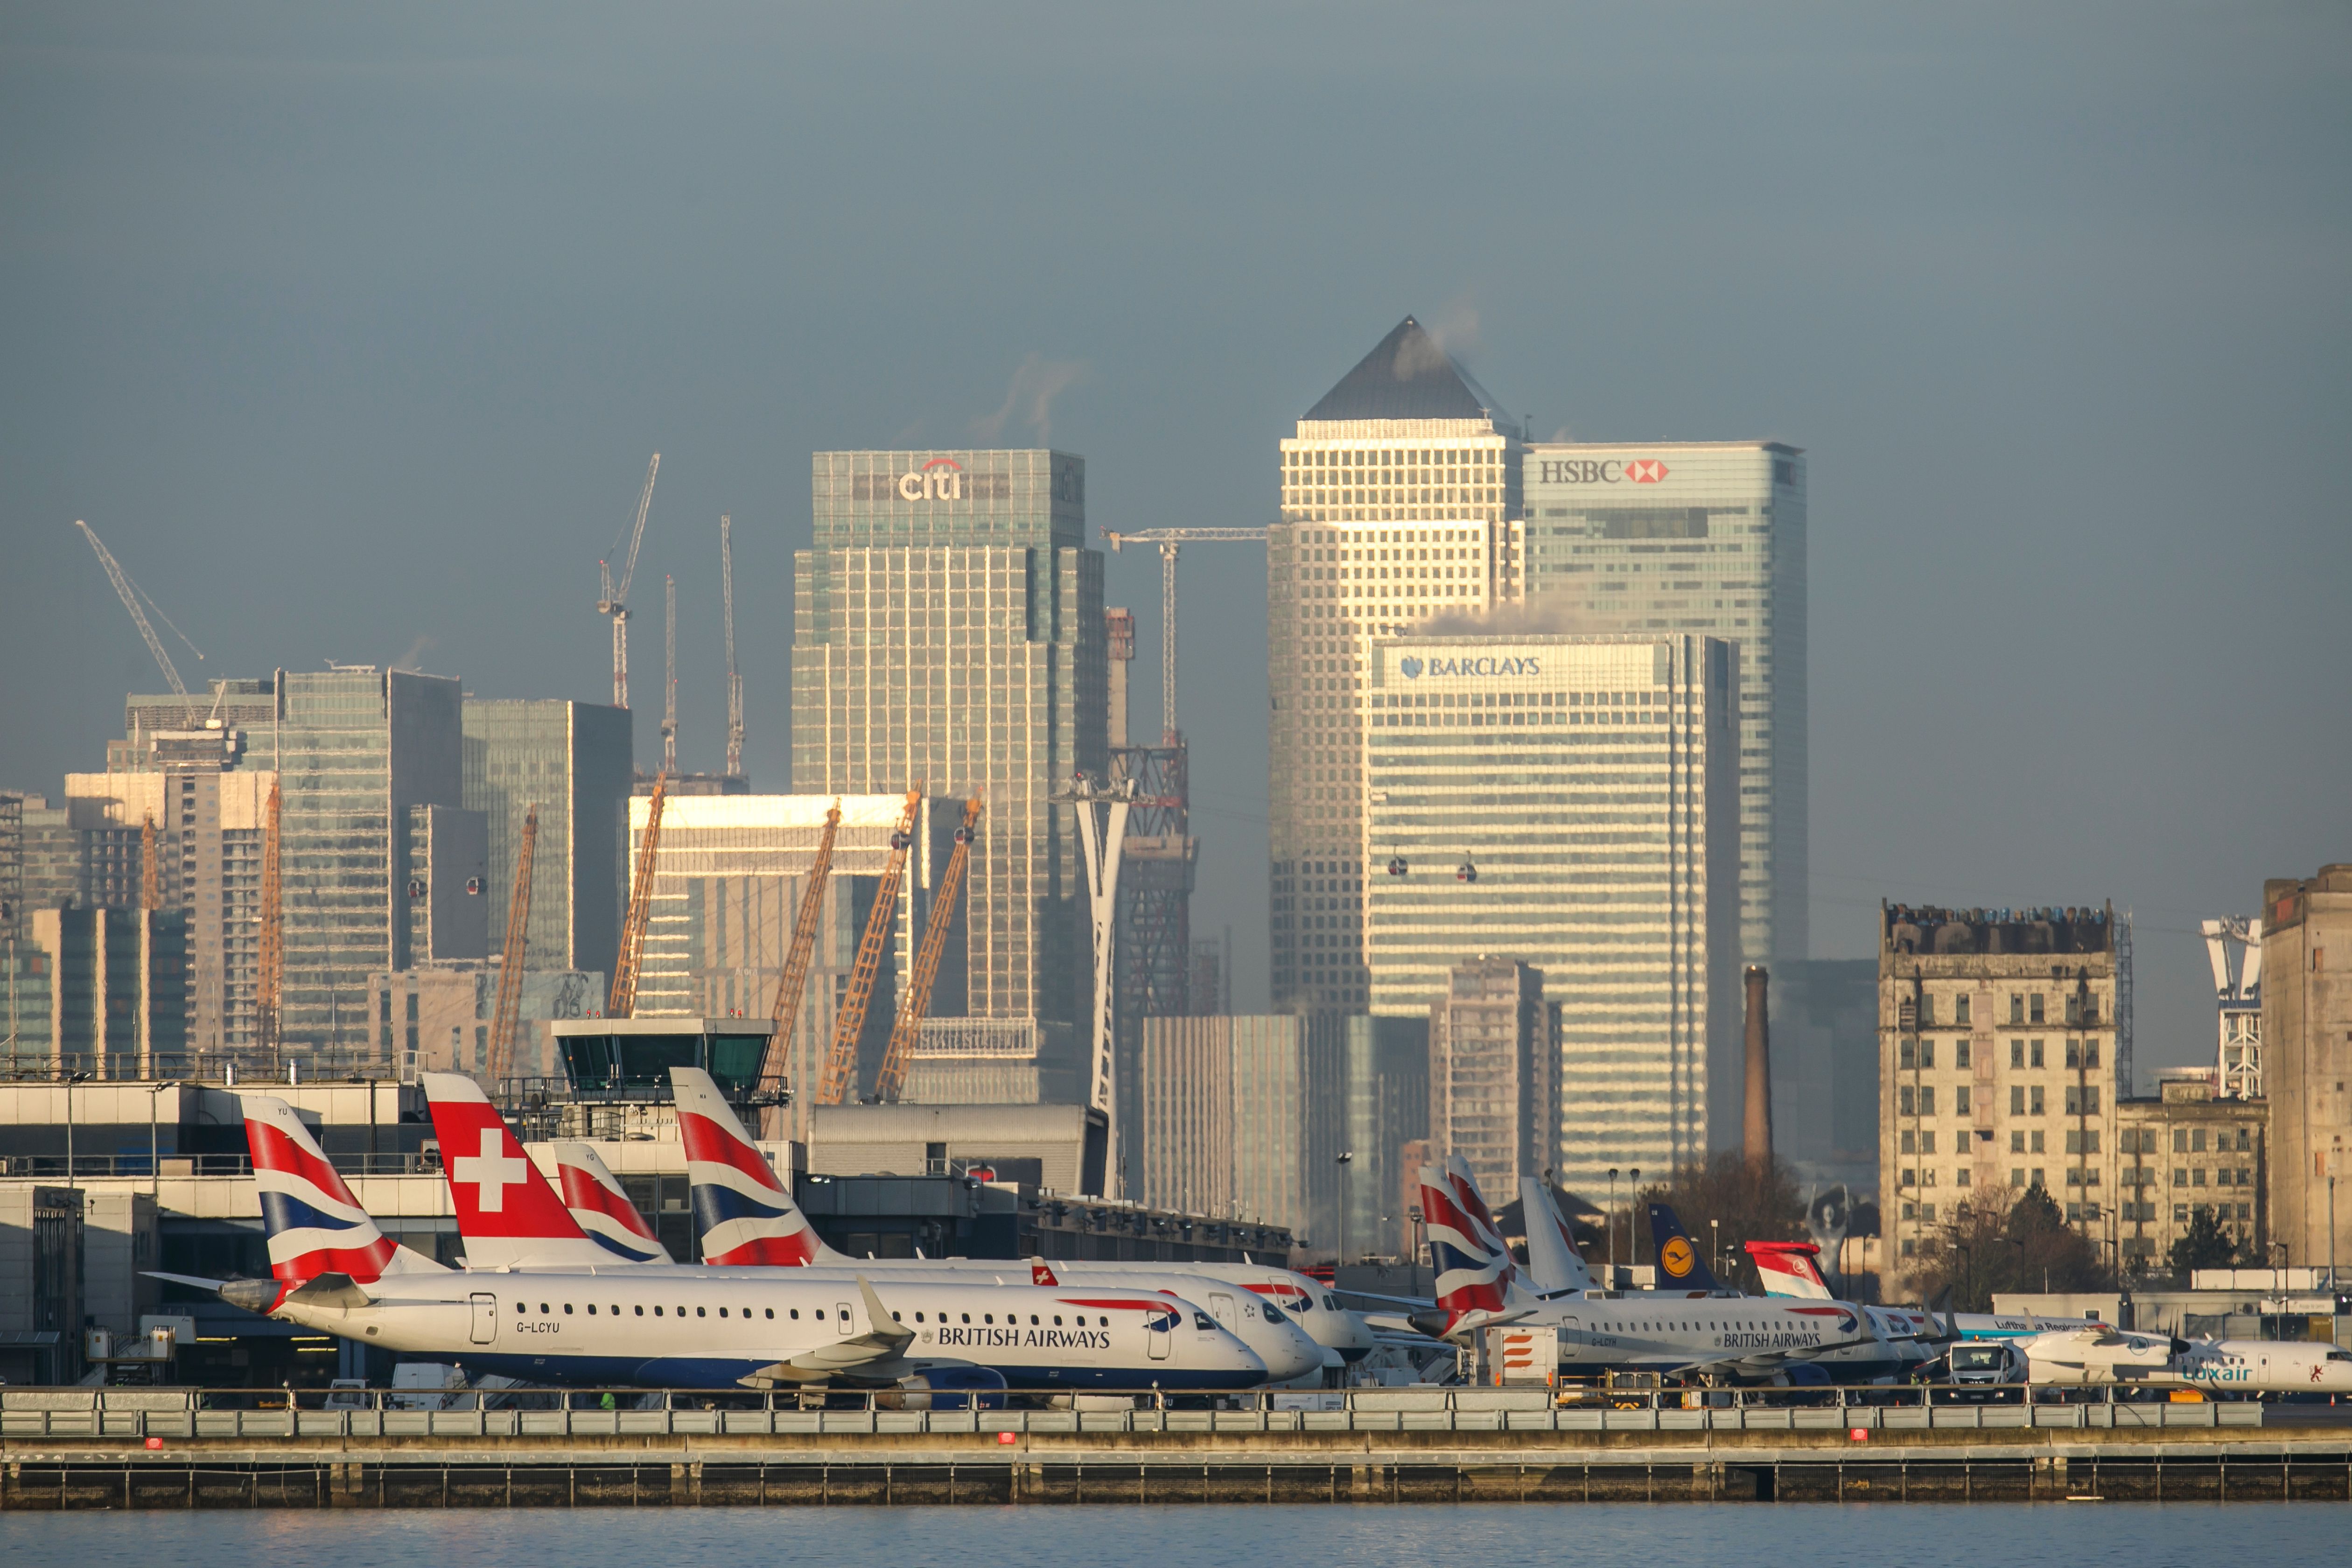 British Airways and SWISS aircraft at London City Airport.